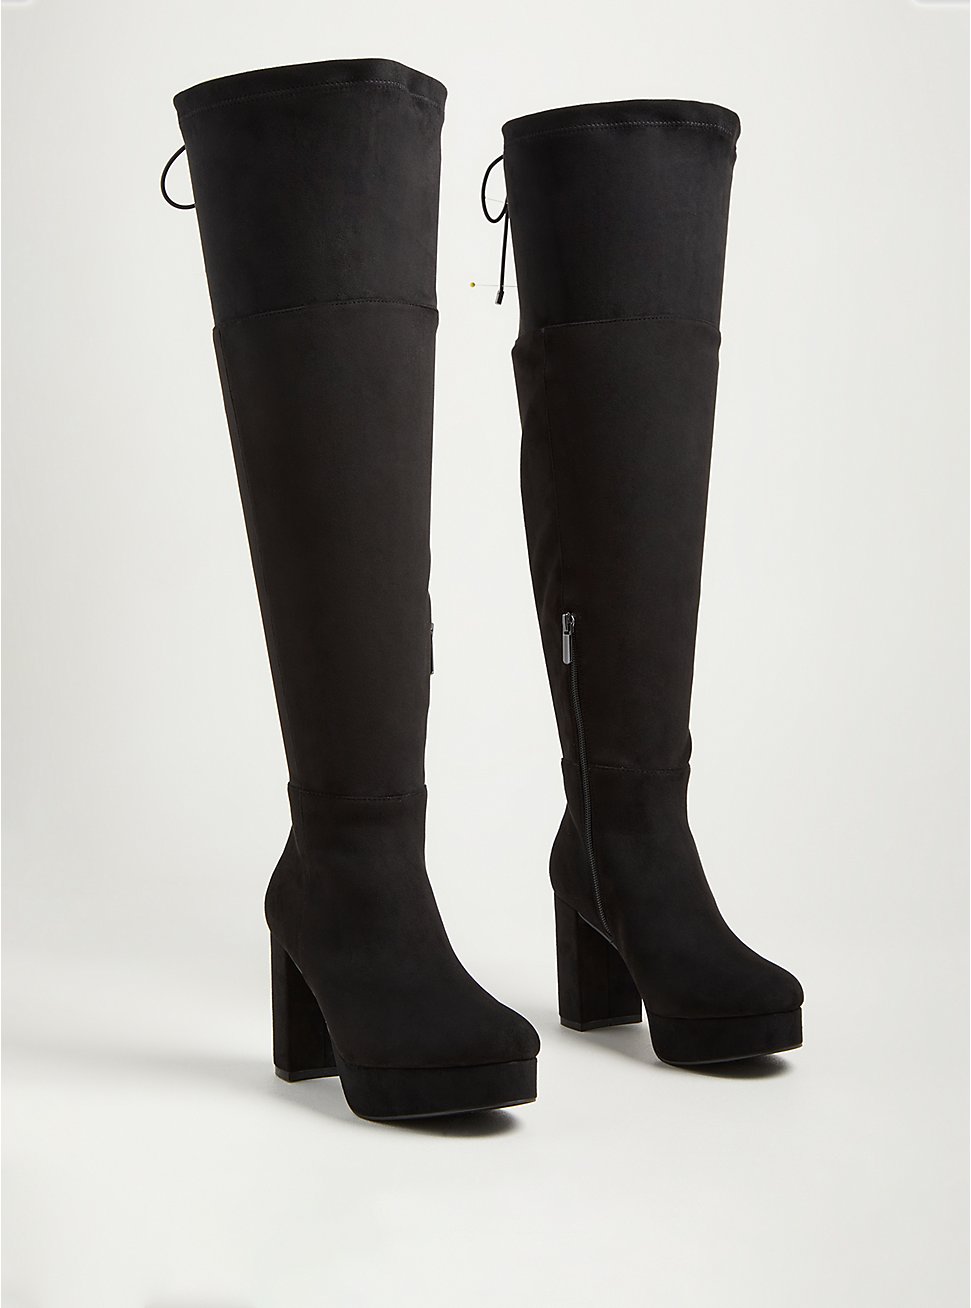 Plus Size Over-the-Knee Platform Heel Boot - Faux Suede Black (WW), BLACK, hi-res